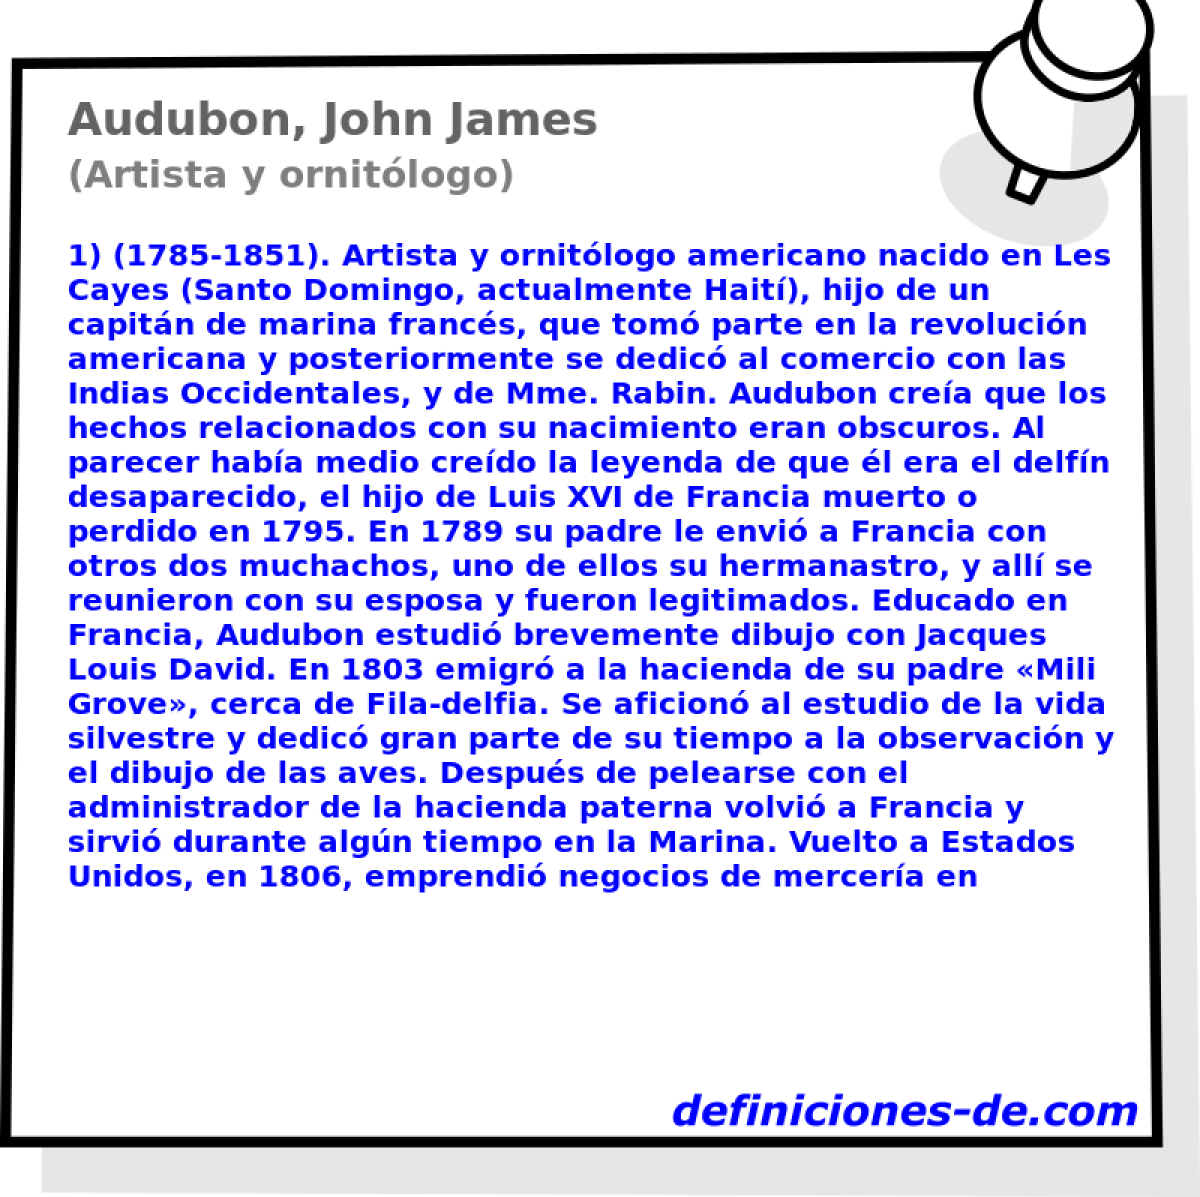 Audubon, John James (Artista y ornitlogo)